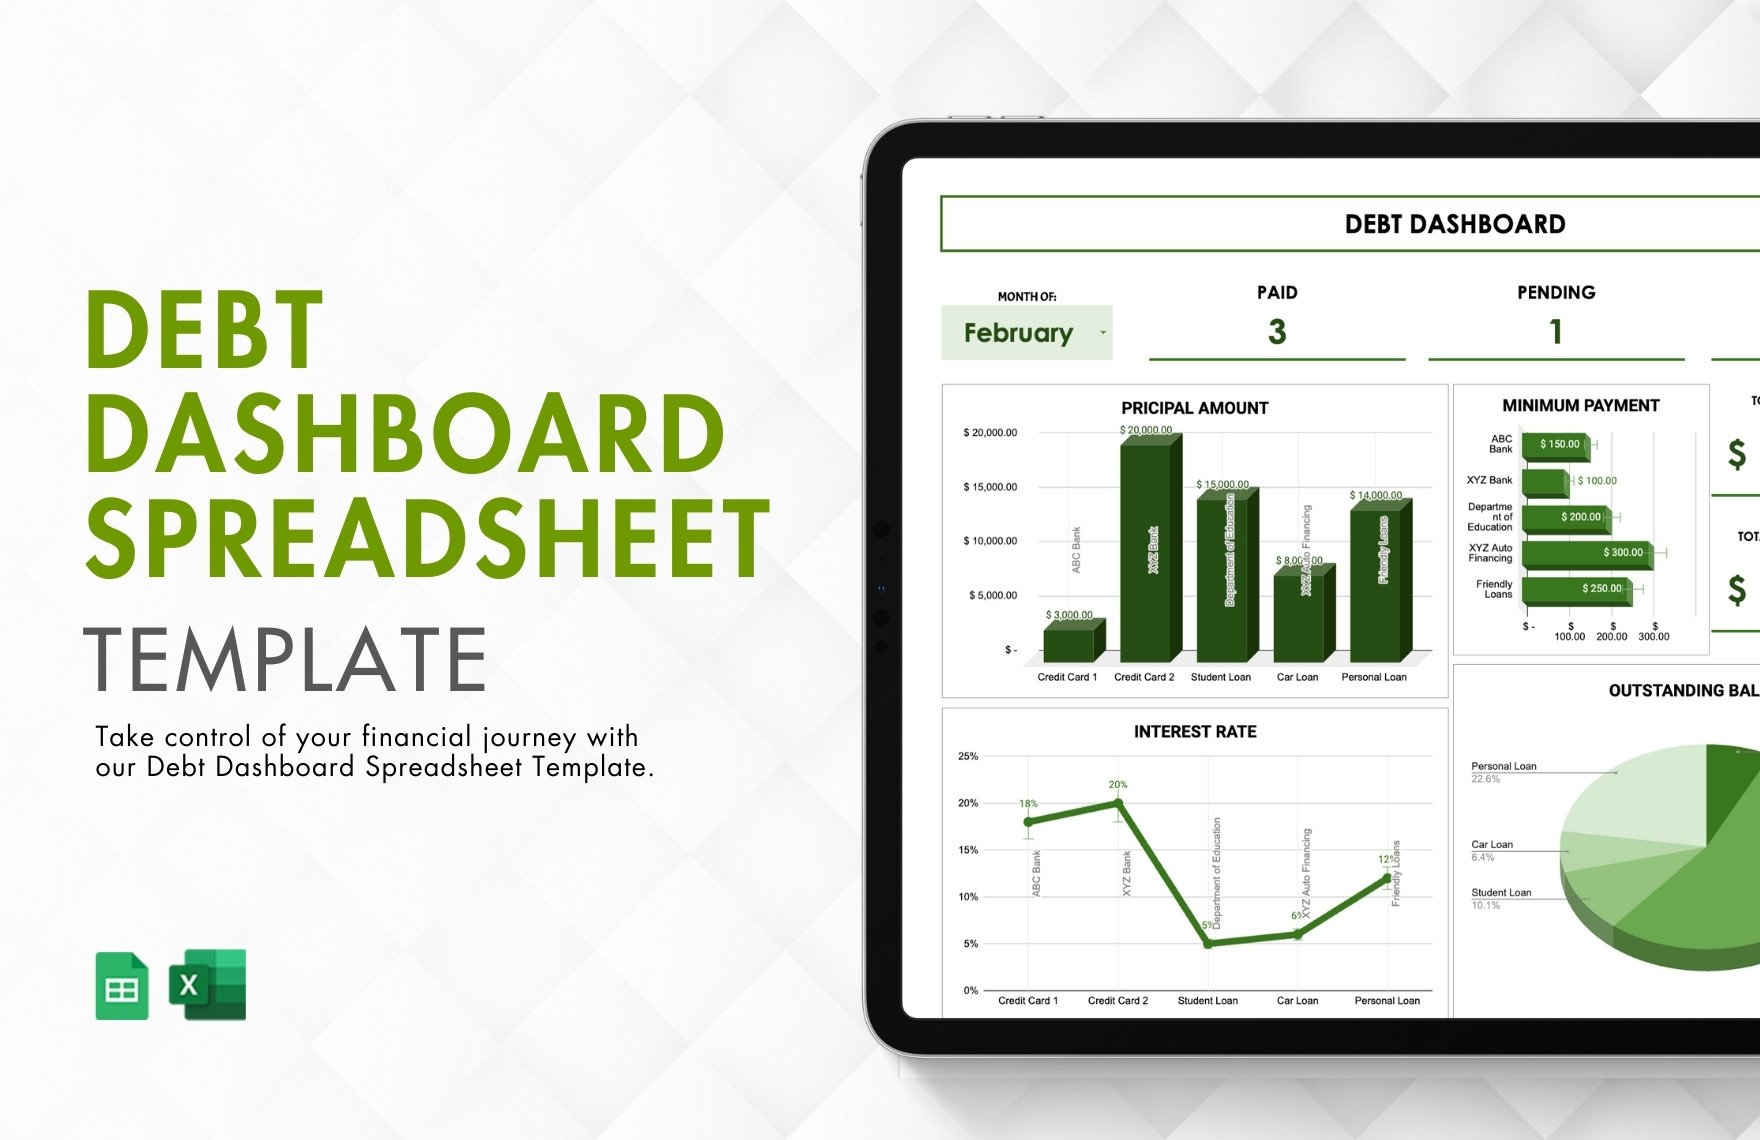 Debt Dashboard Spreadsheet Template in Excel, Google Sheets